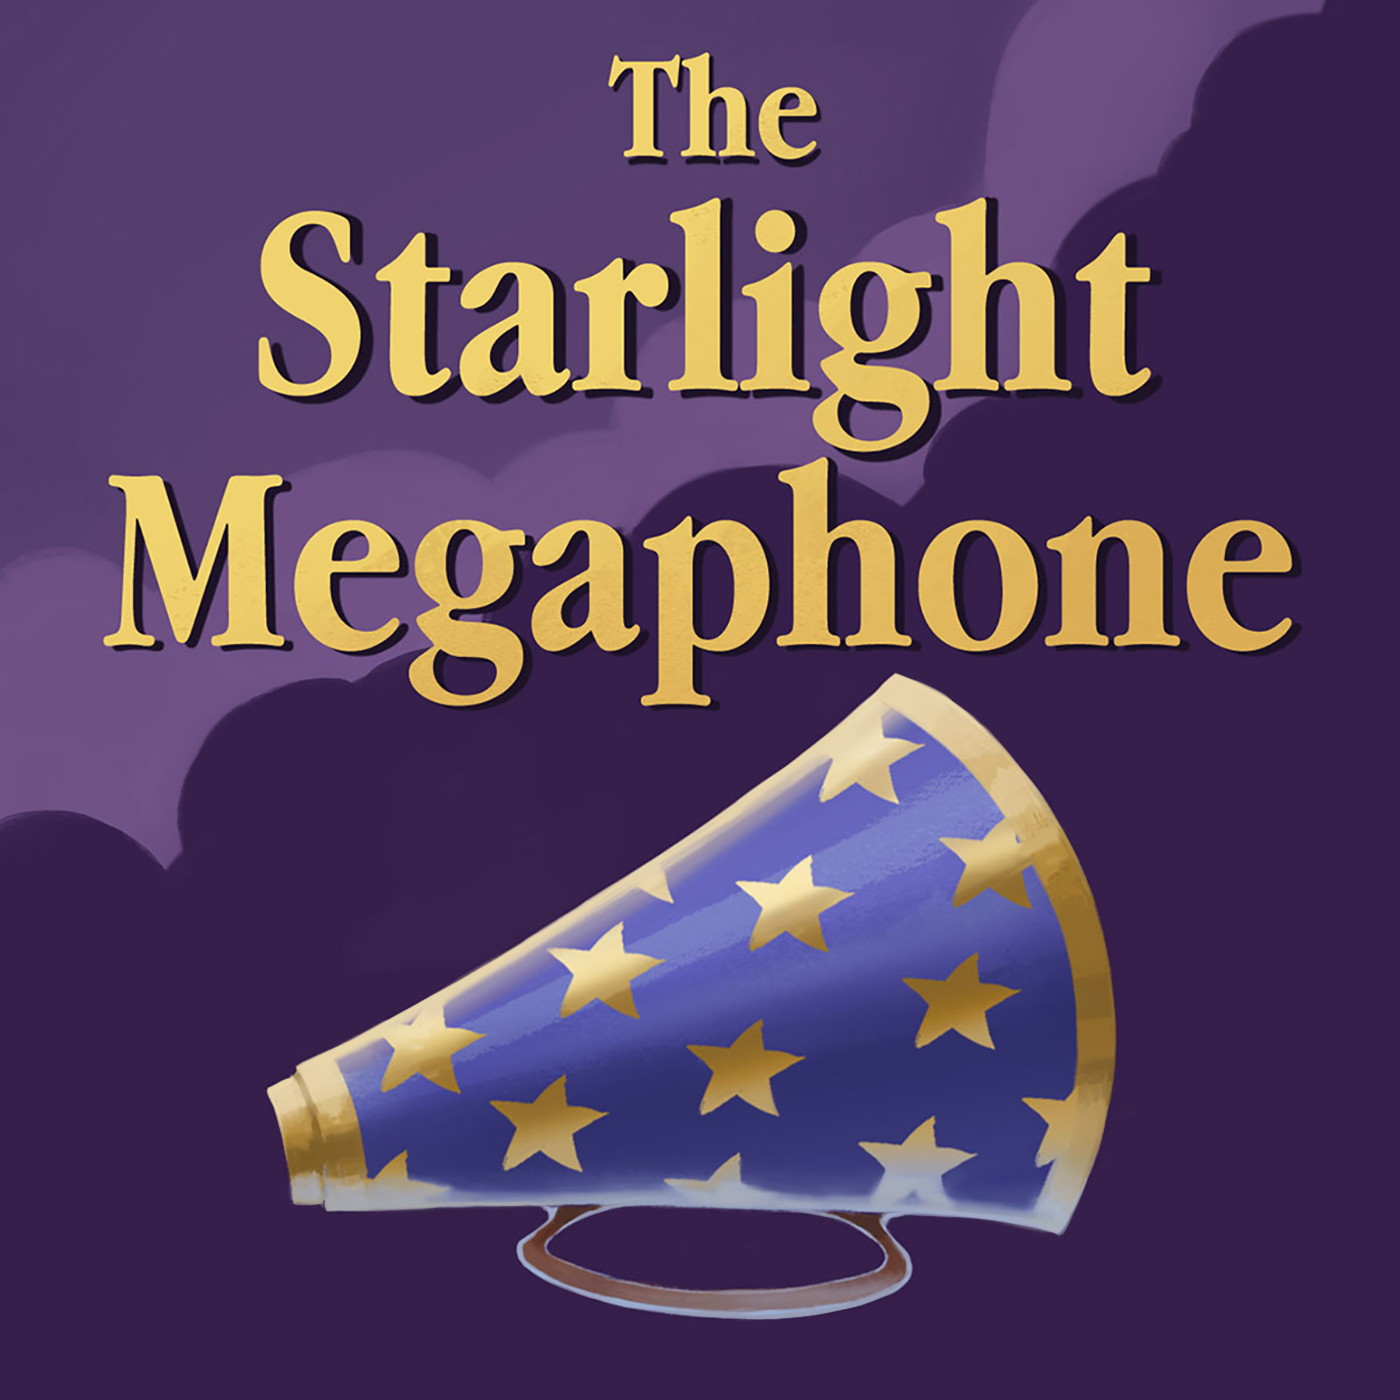 The Starlight Megaphone